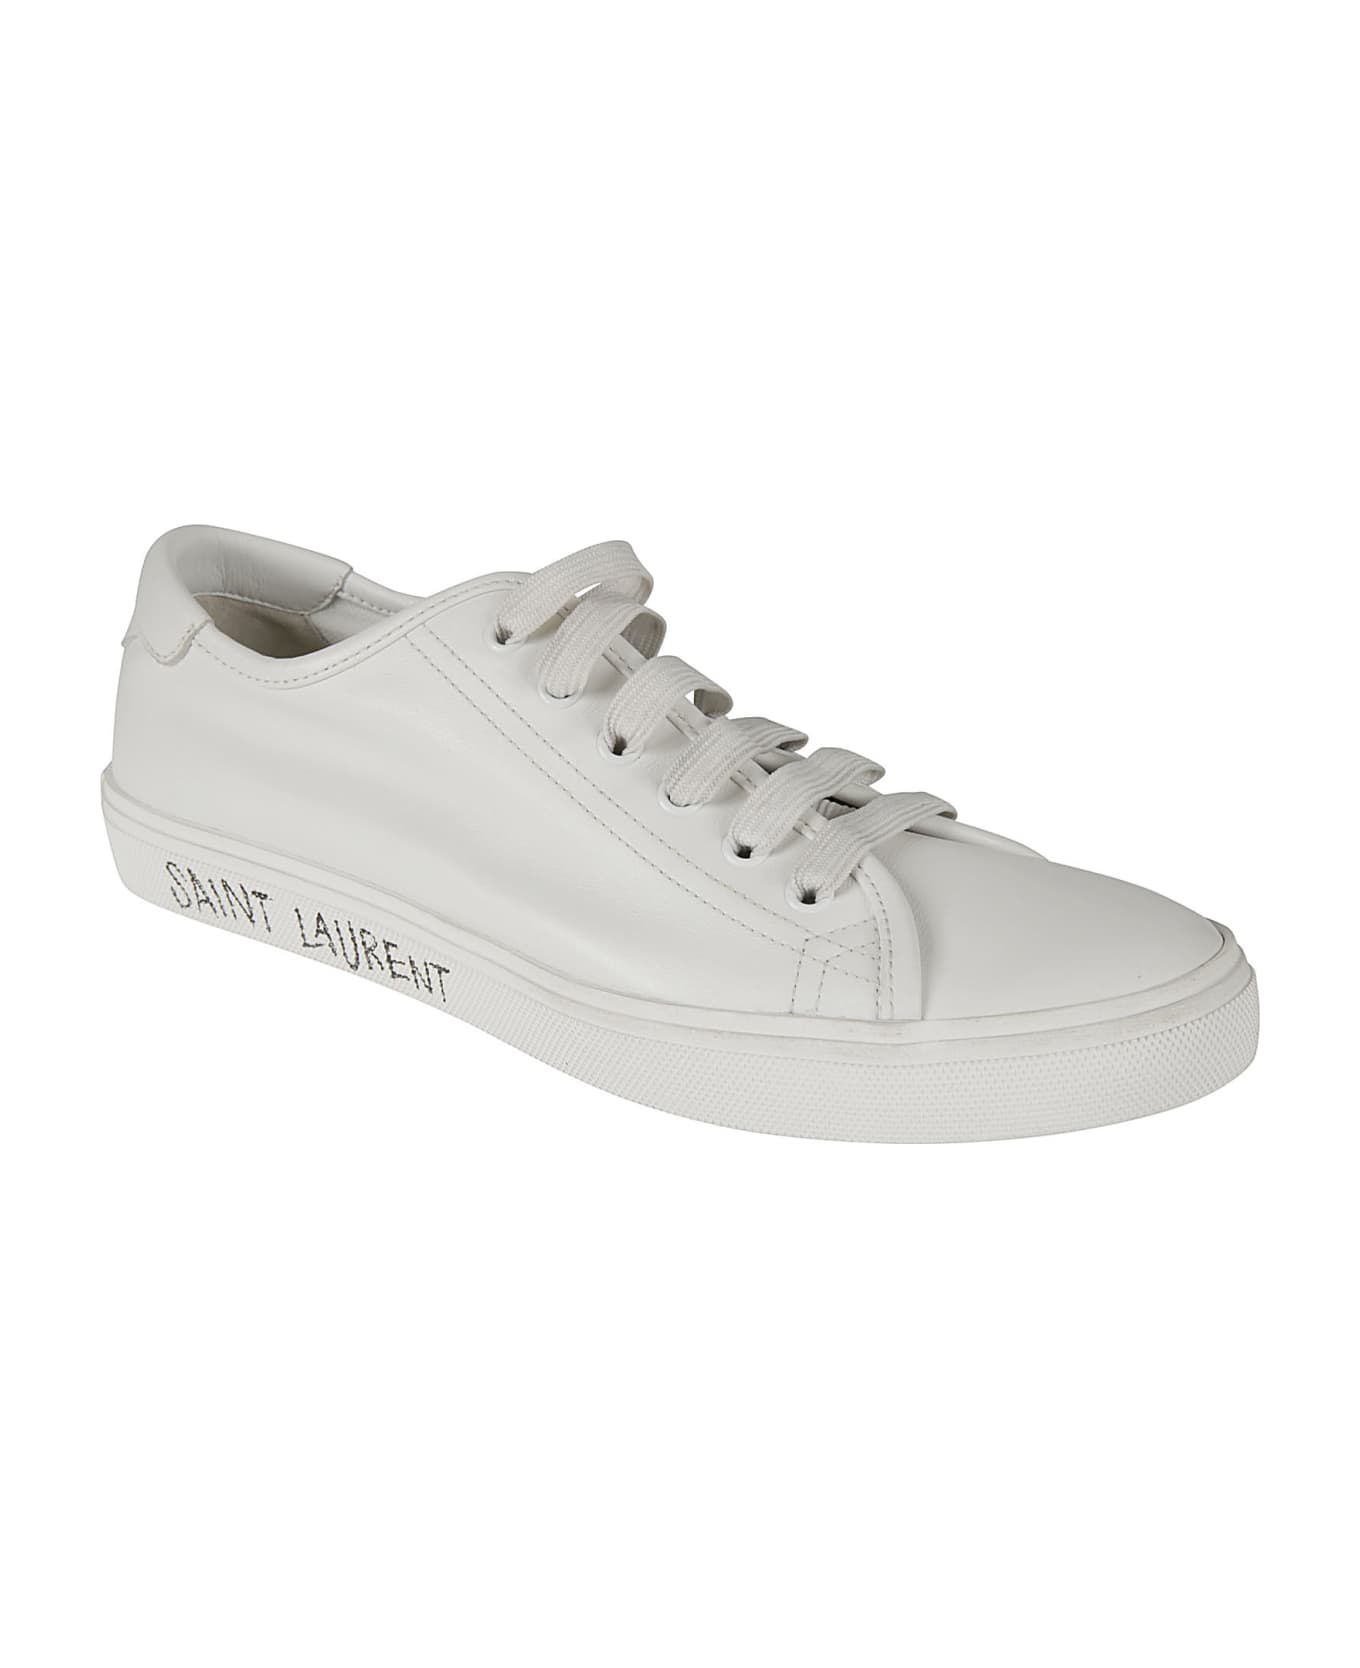 Saint Laurent Malibu Sneakers - Optic White